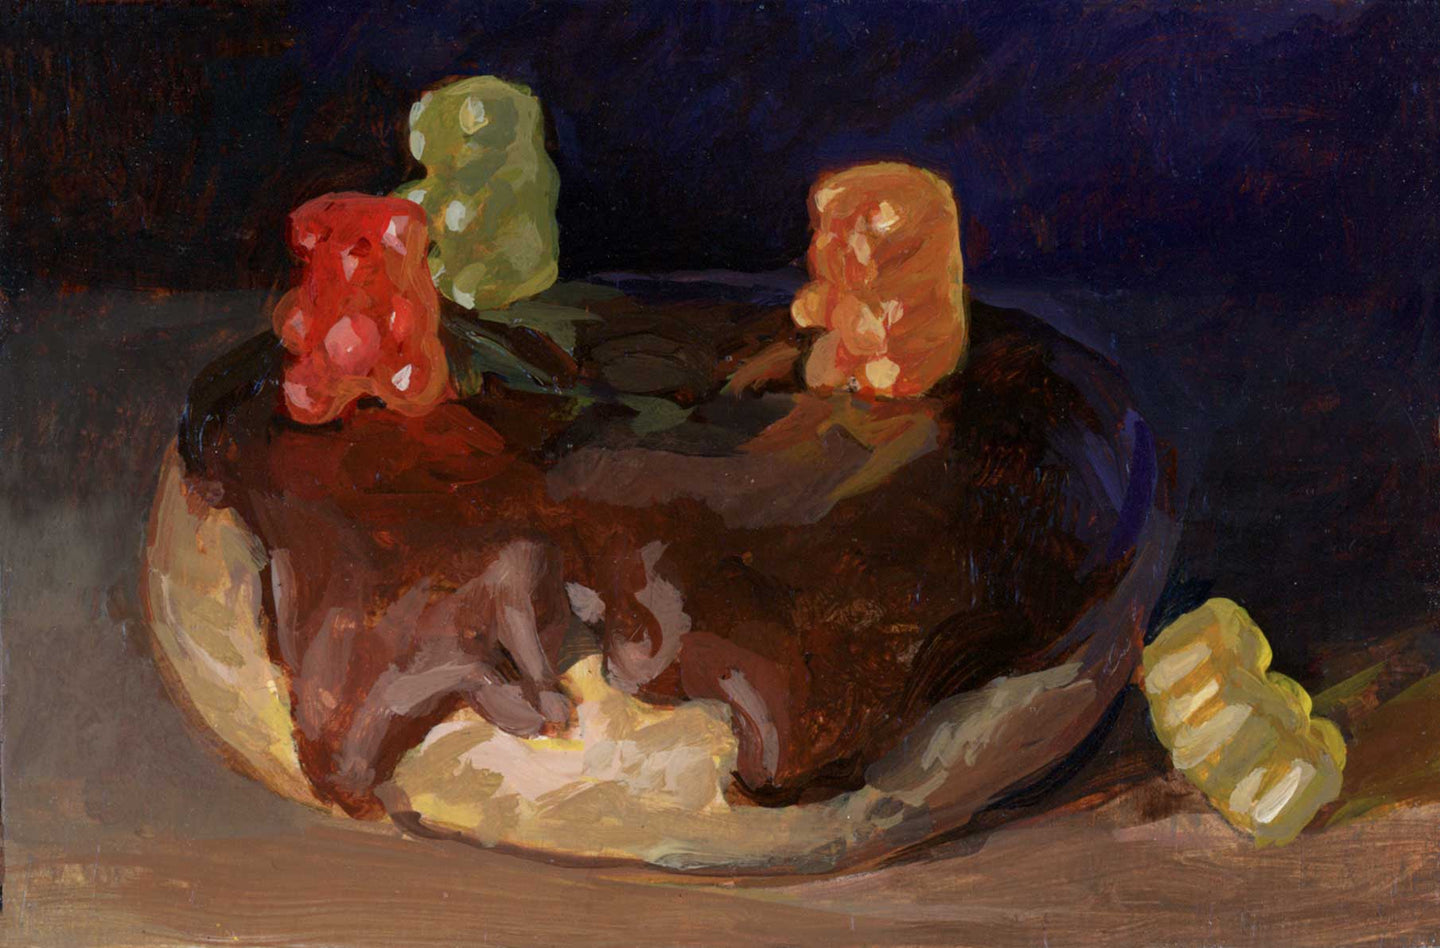 77. Gummy Bears on Chocolate Donut